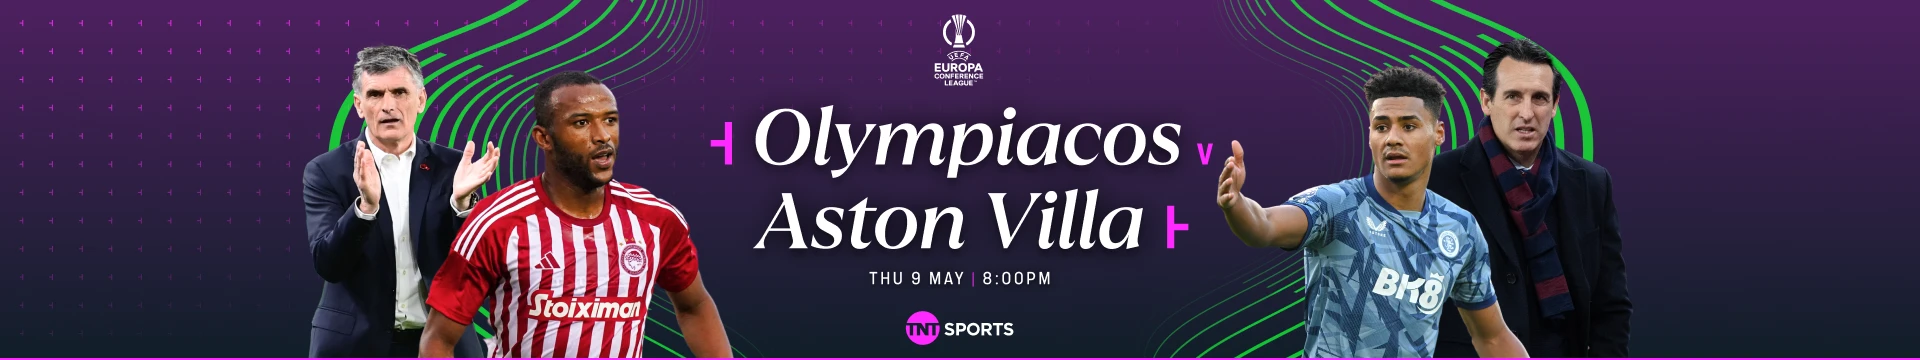 Olympiakos v Aston Villa Thursday 9 May at 8pm